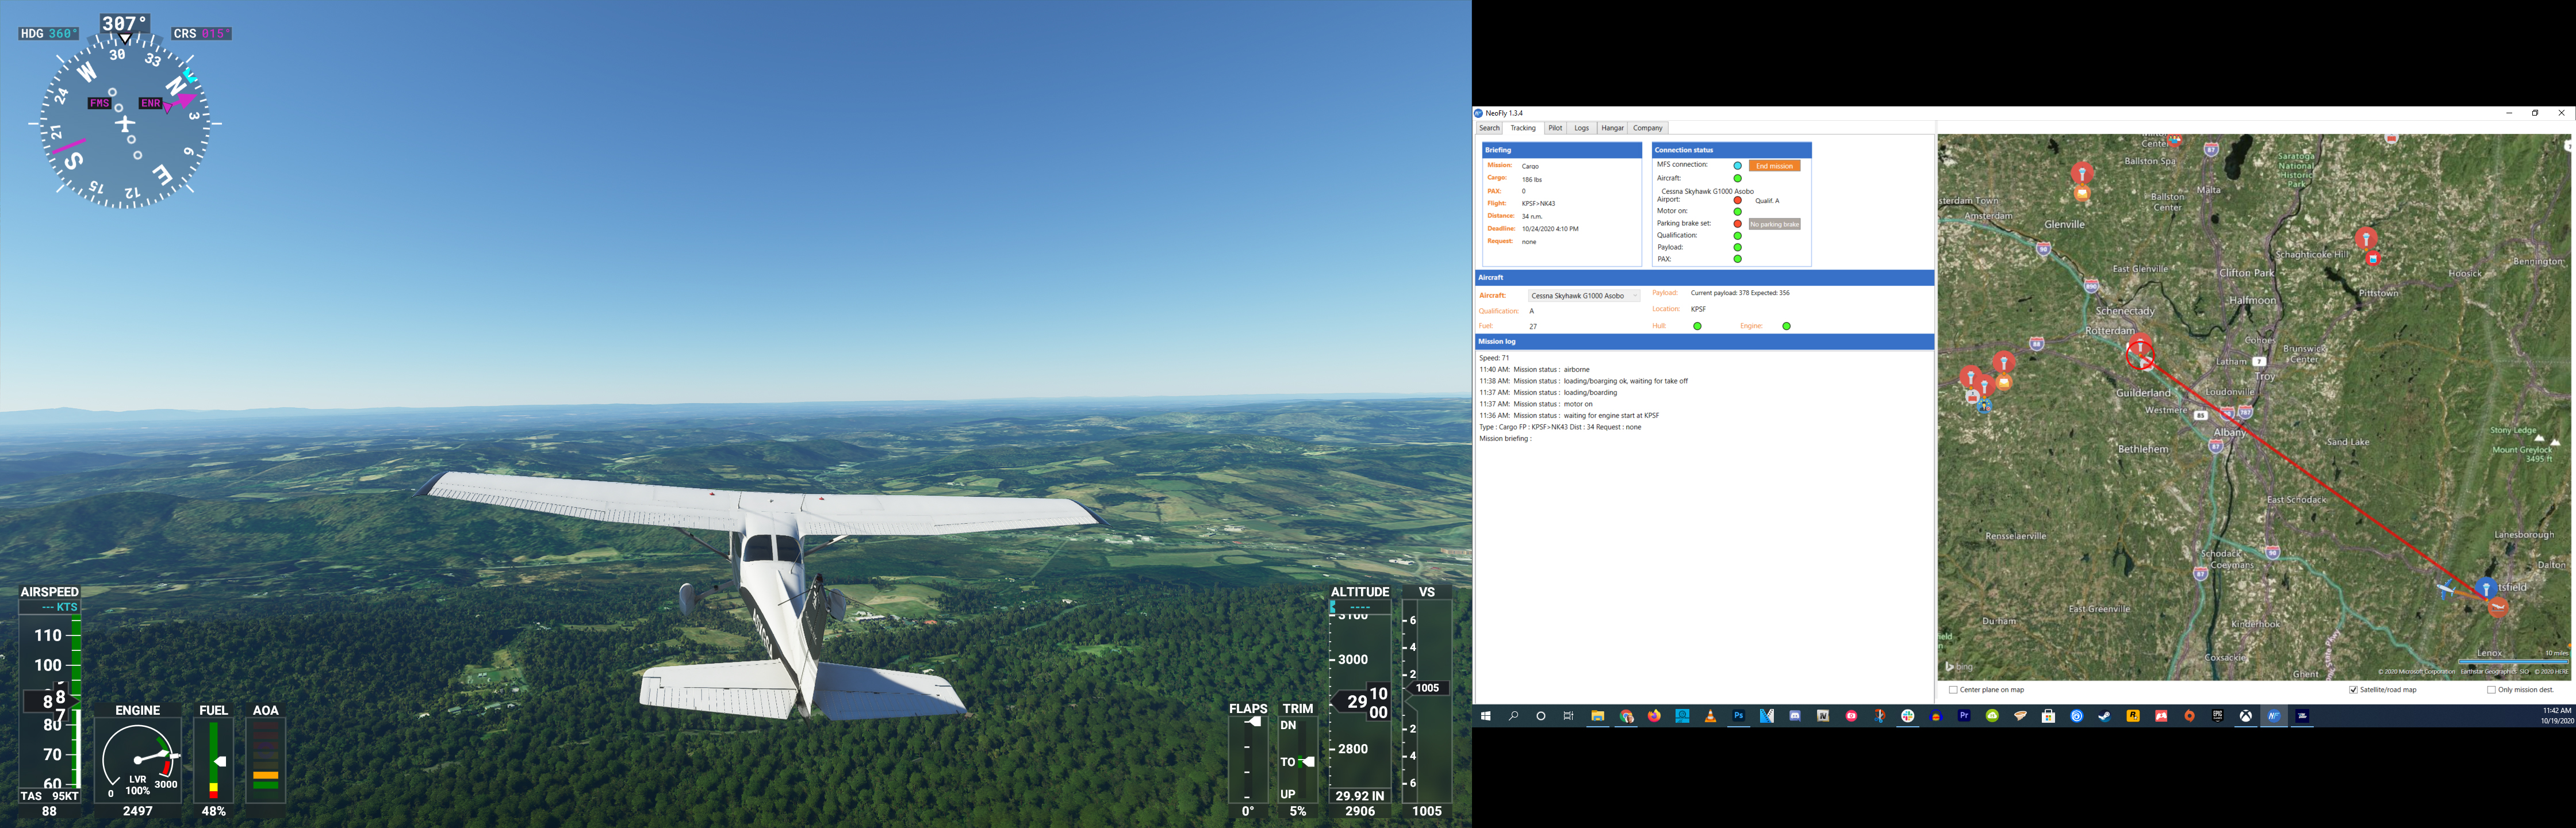 Microsoft Flight Simulator NeoFly plugin